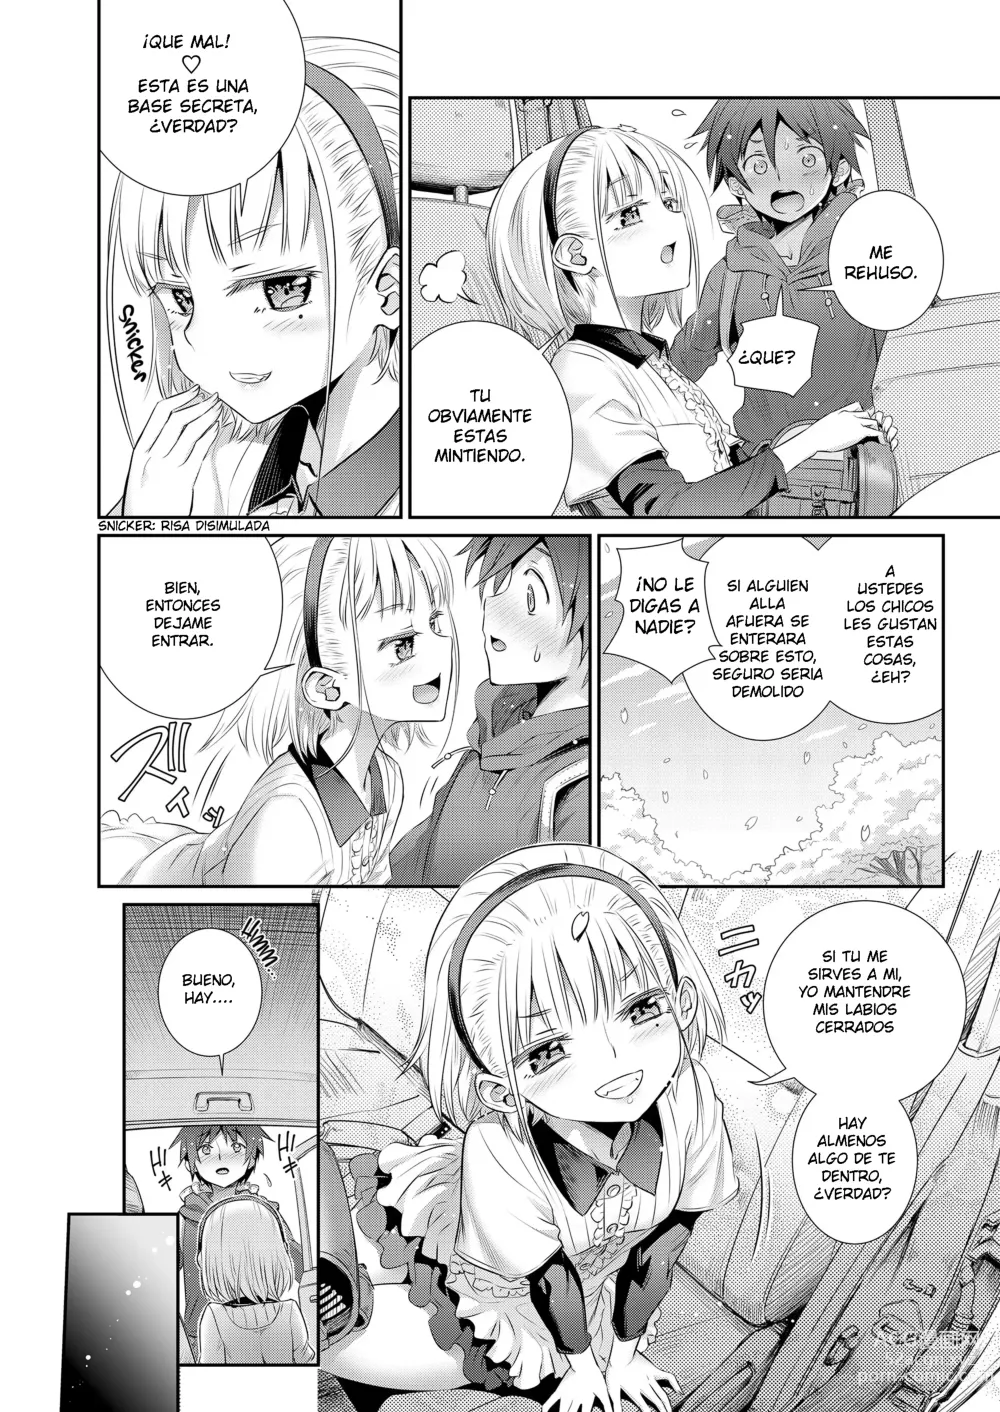 Page 6 of manga Nuestra Base Secreta